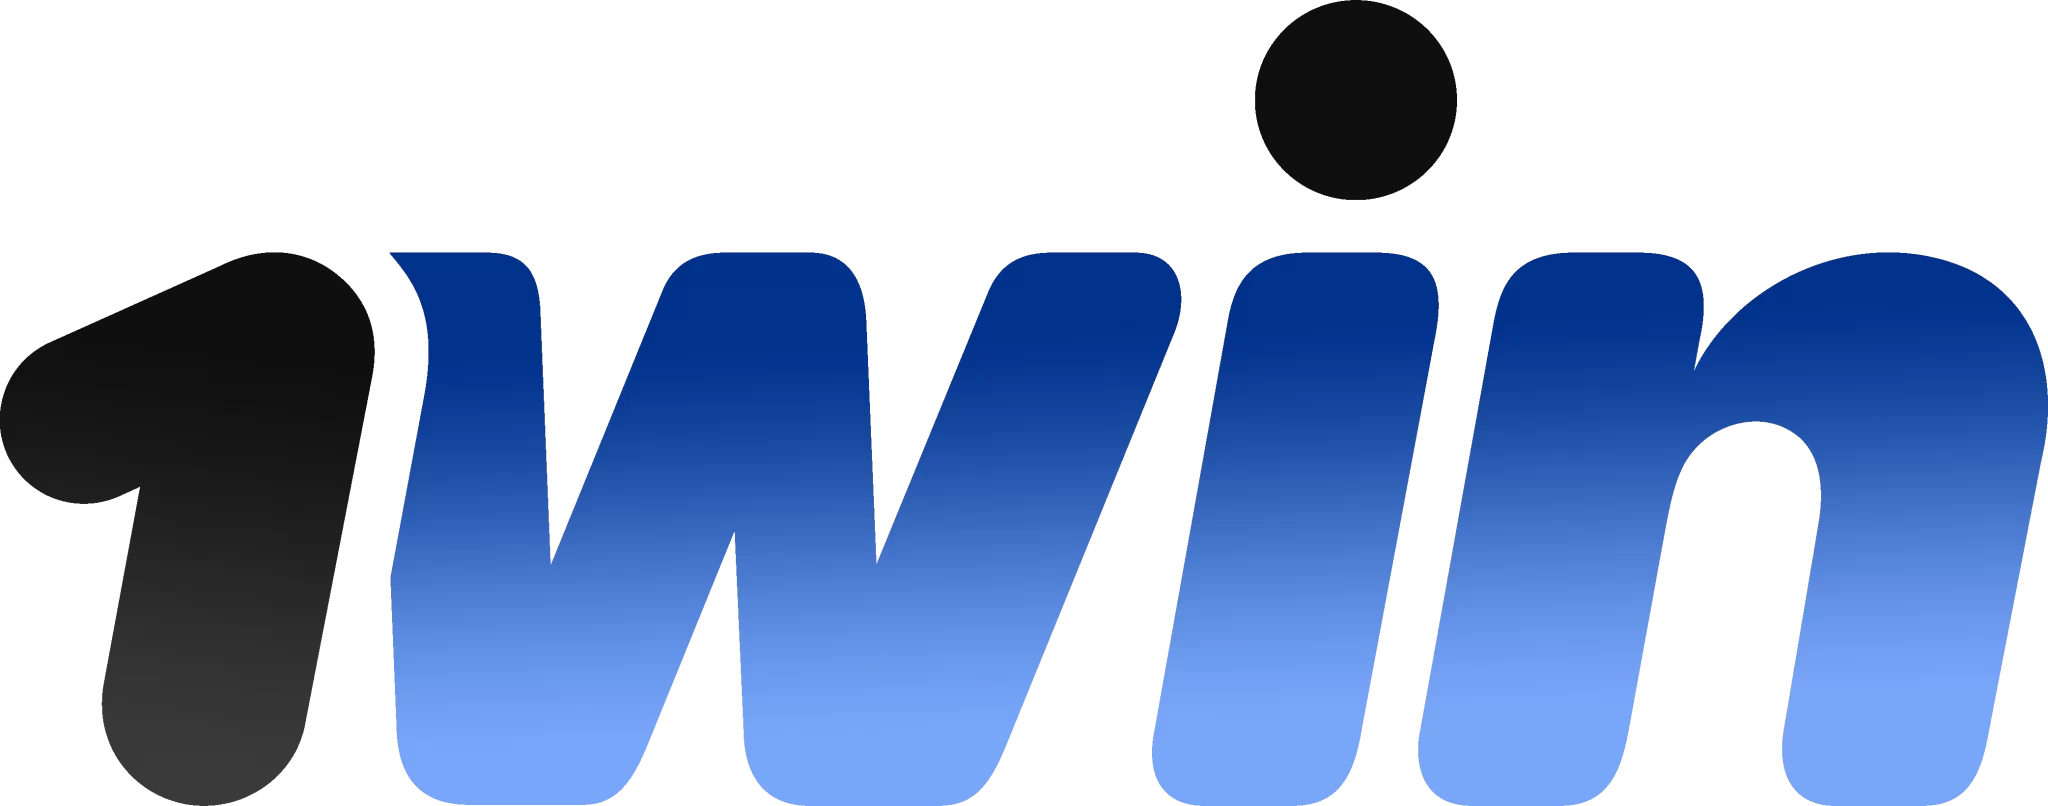 1win сайт. 1win logo. 1win аватарка. 1win надпись. 1win логотип казино.